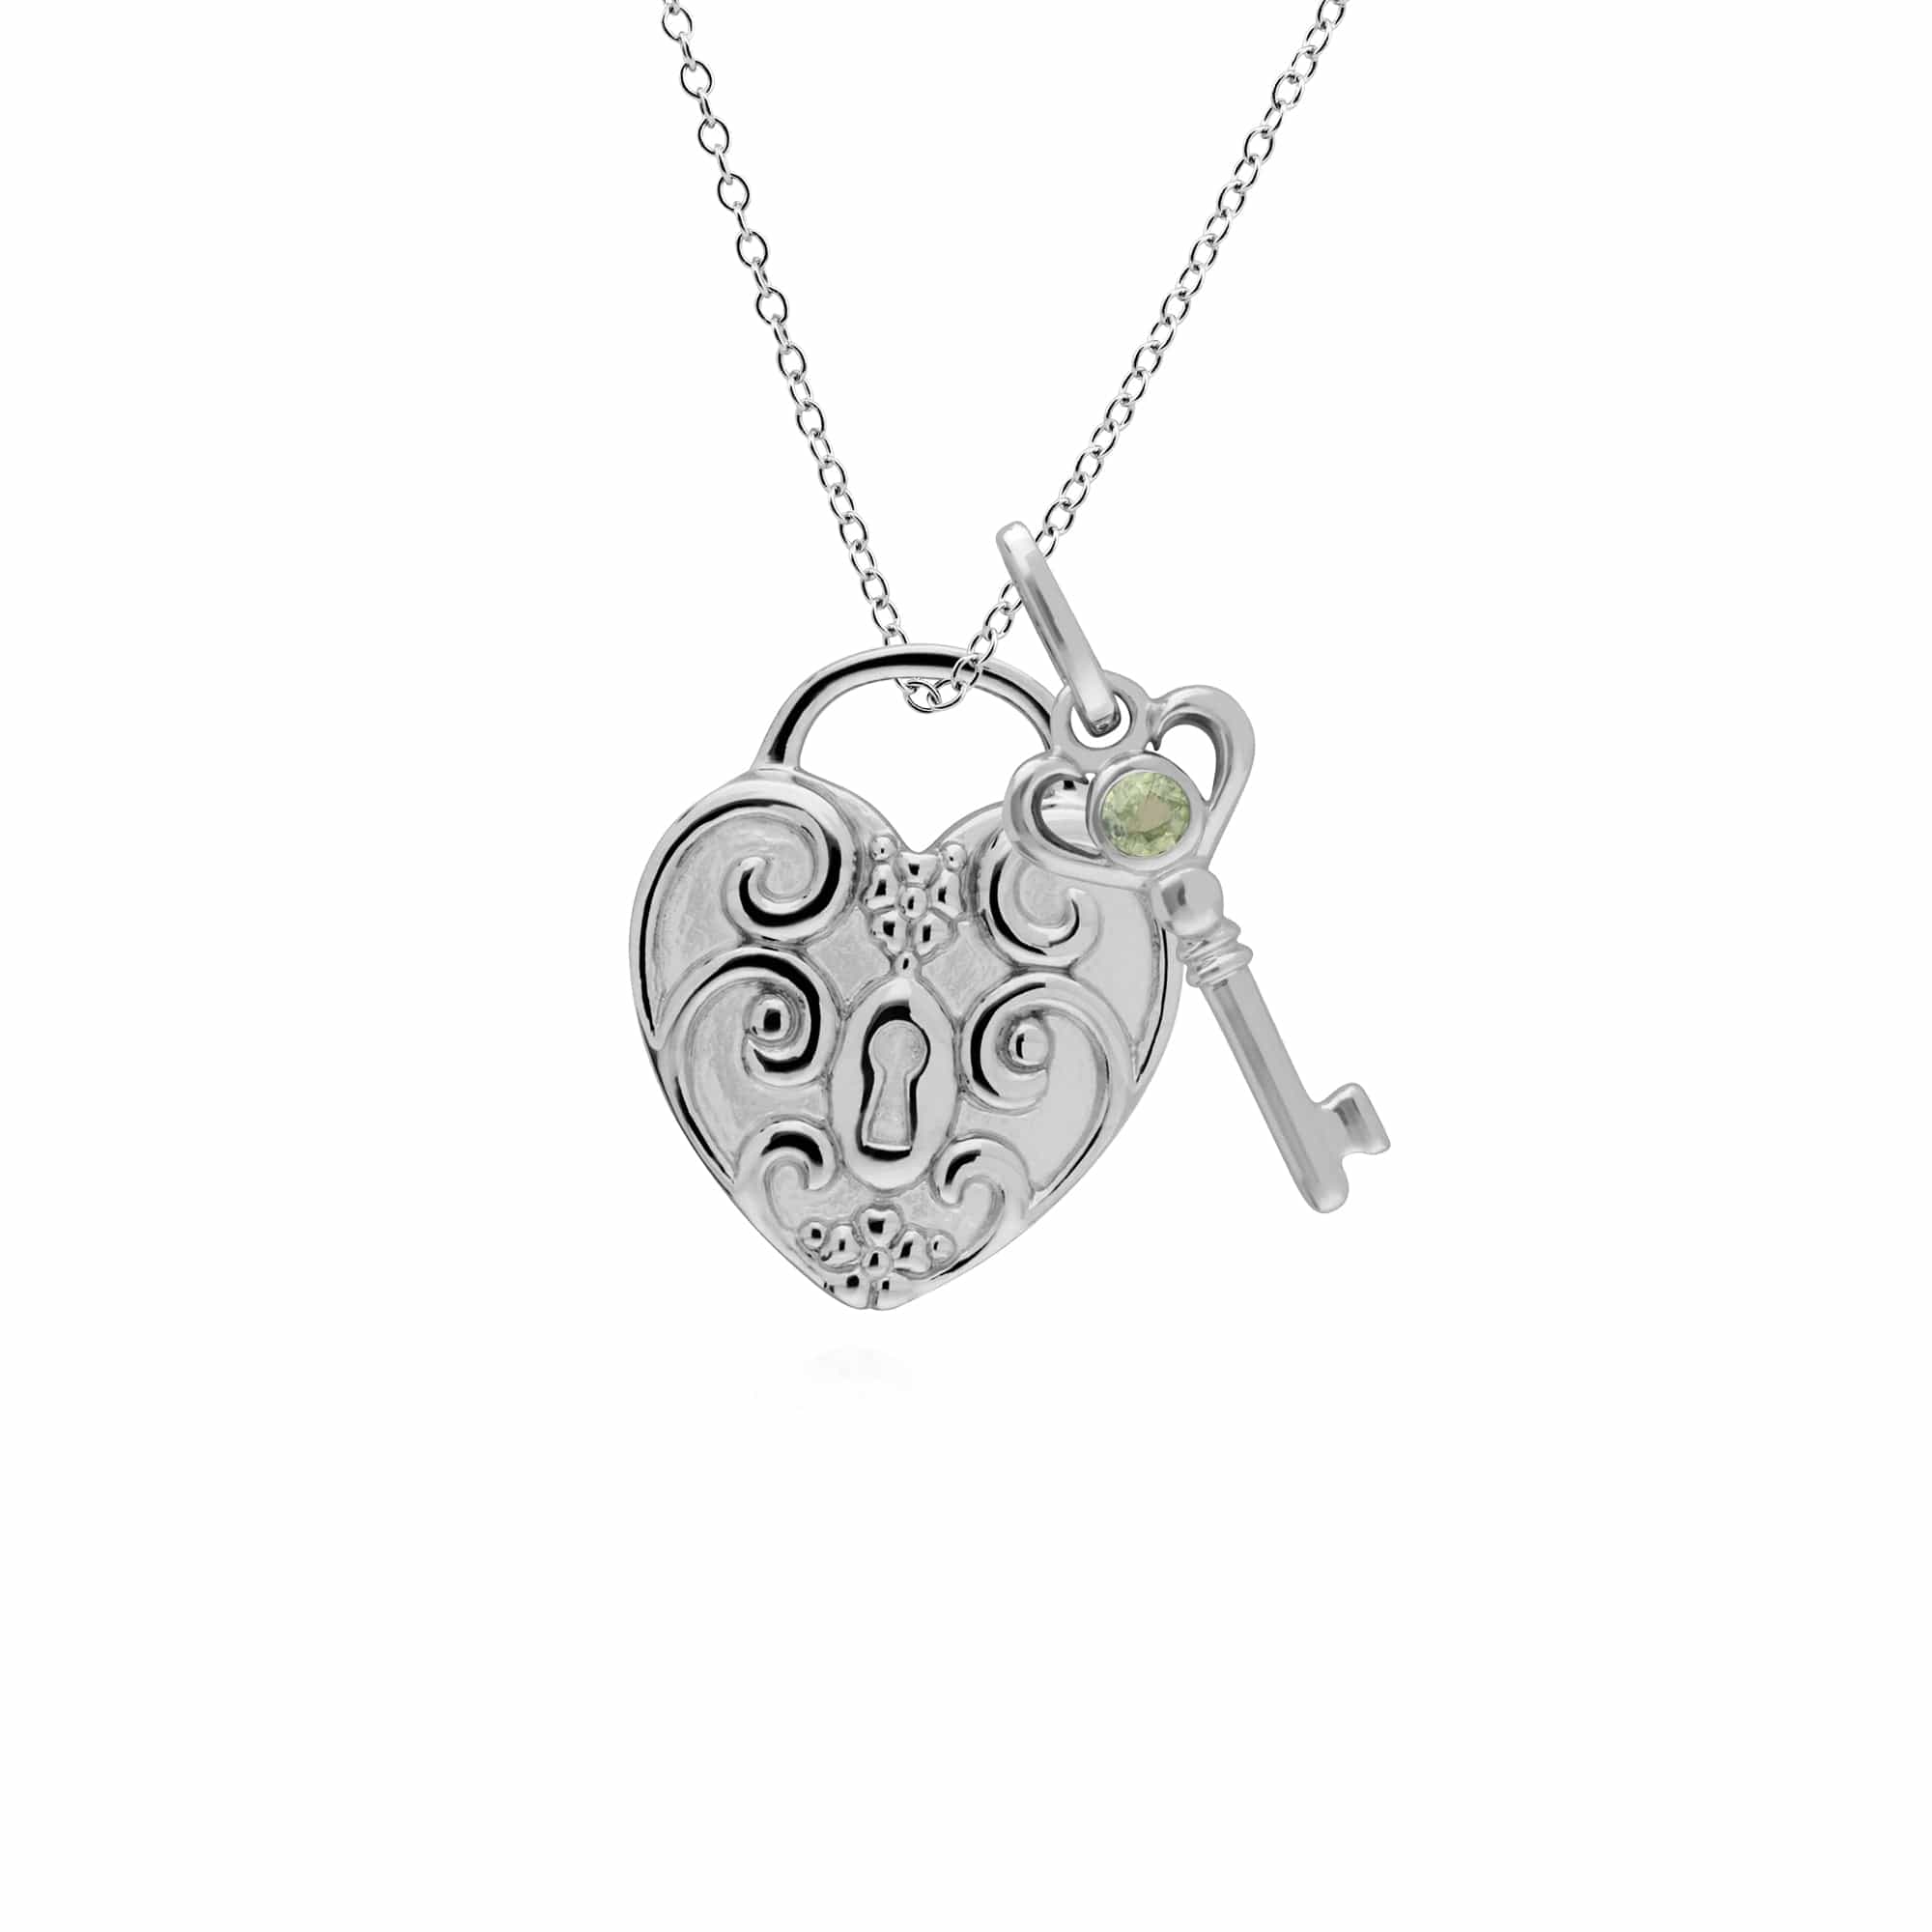 270P026407925-270P026601925 Classic Swirl Heart Lock Pendant & Peridot Key Charm in 925 Sterling Silver 1